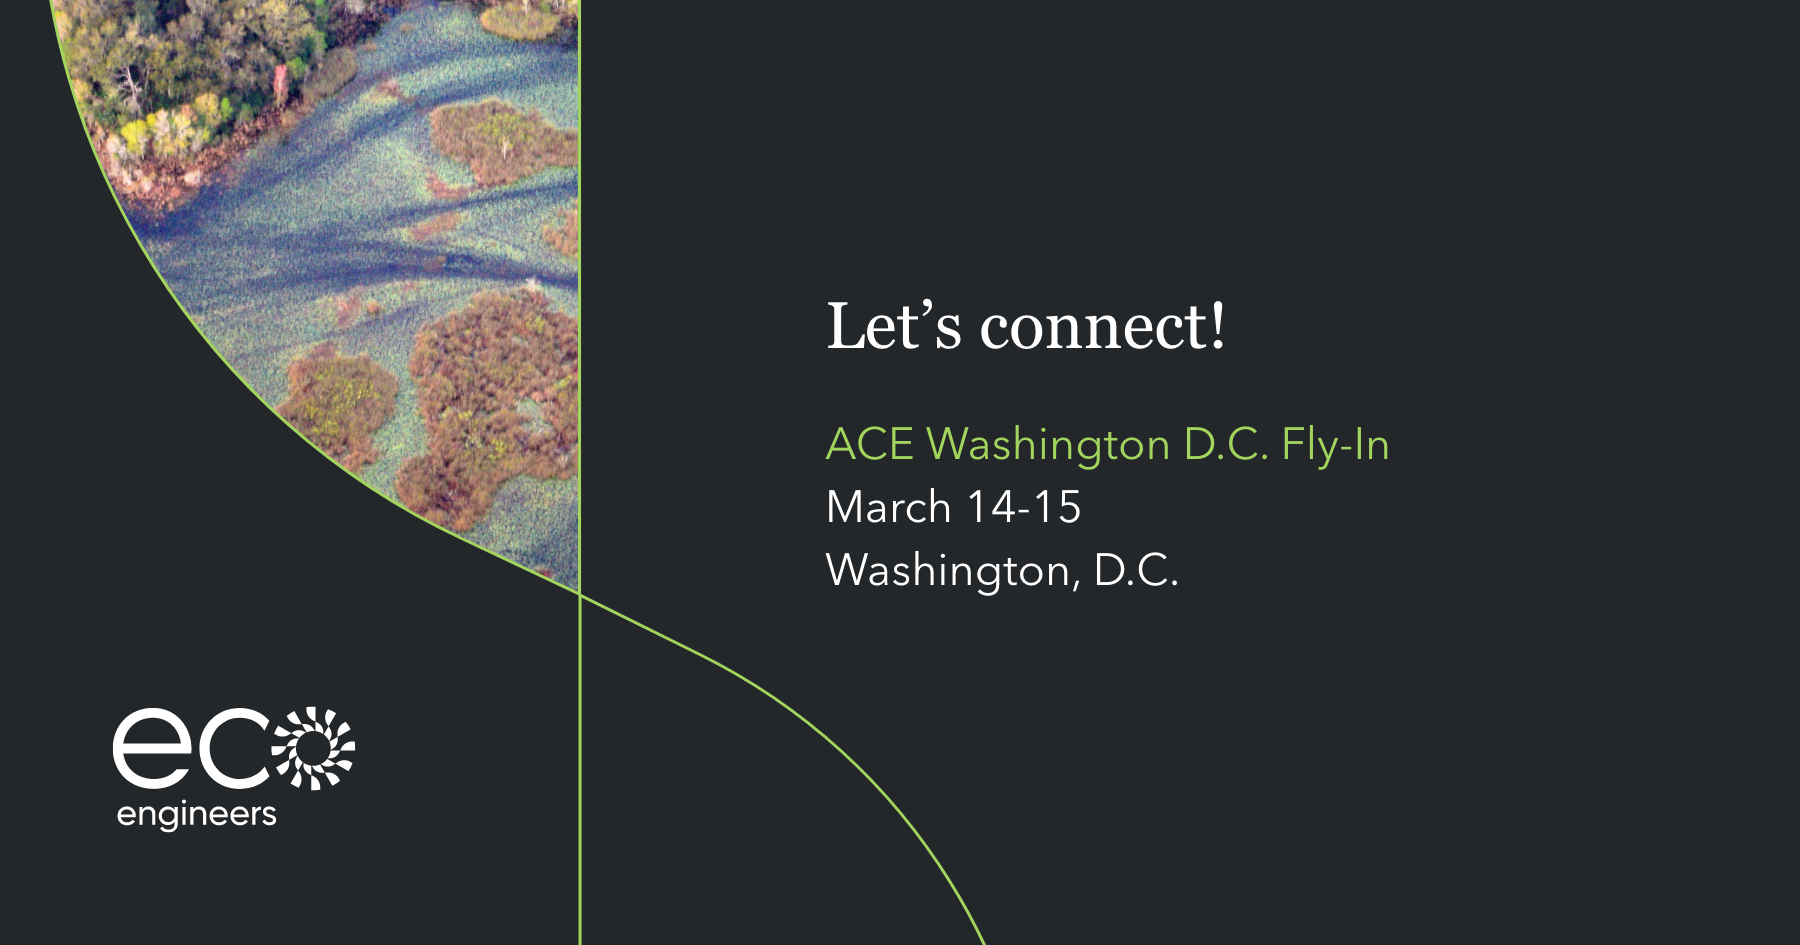 ACE Washington D.C. Fly-In